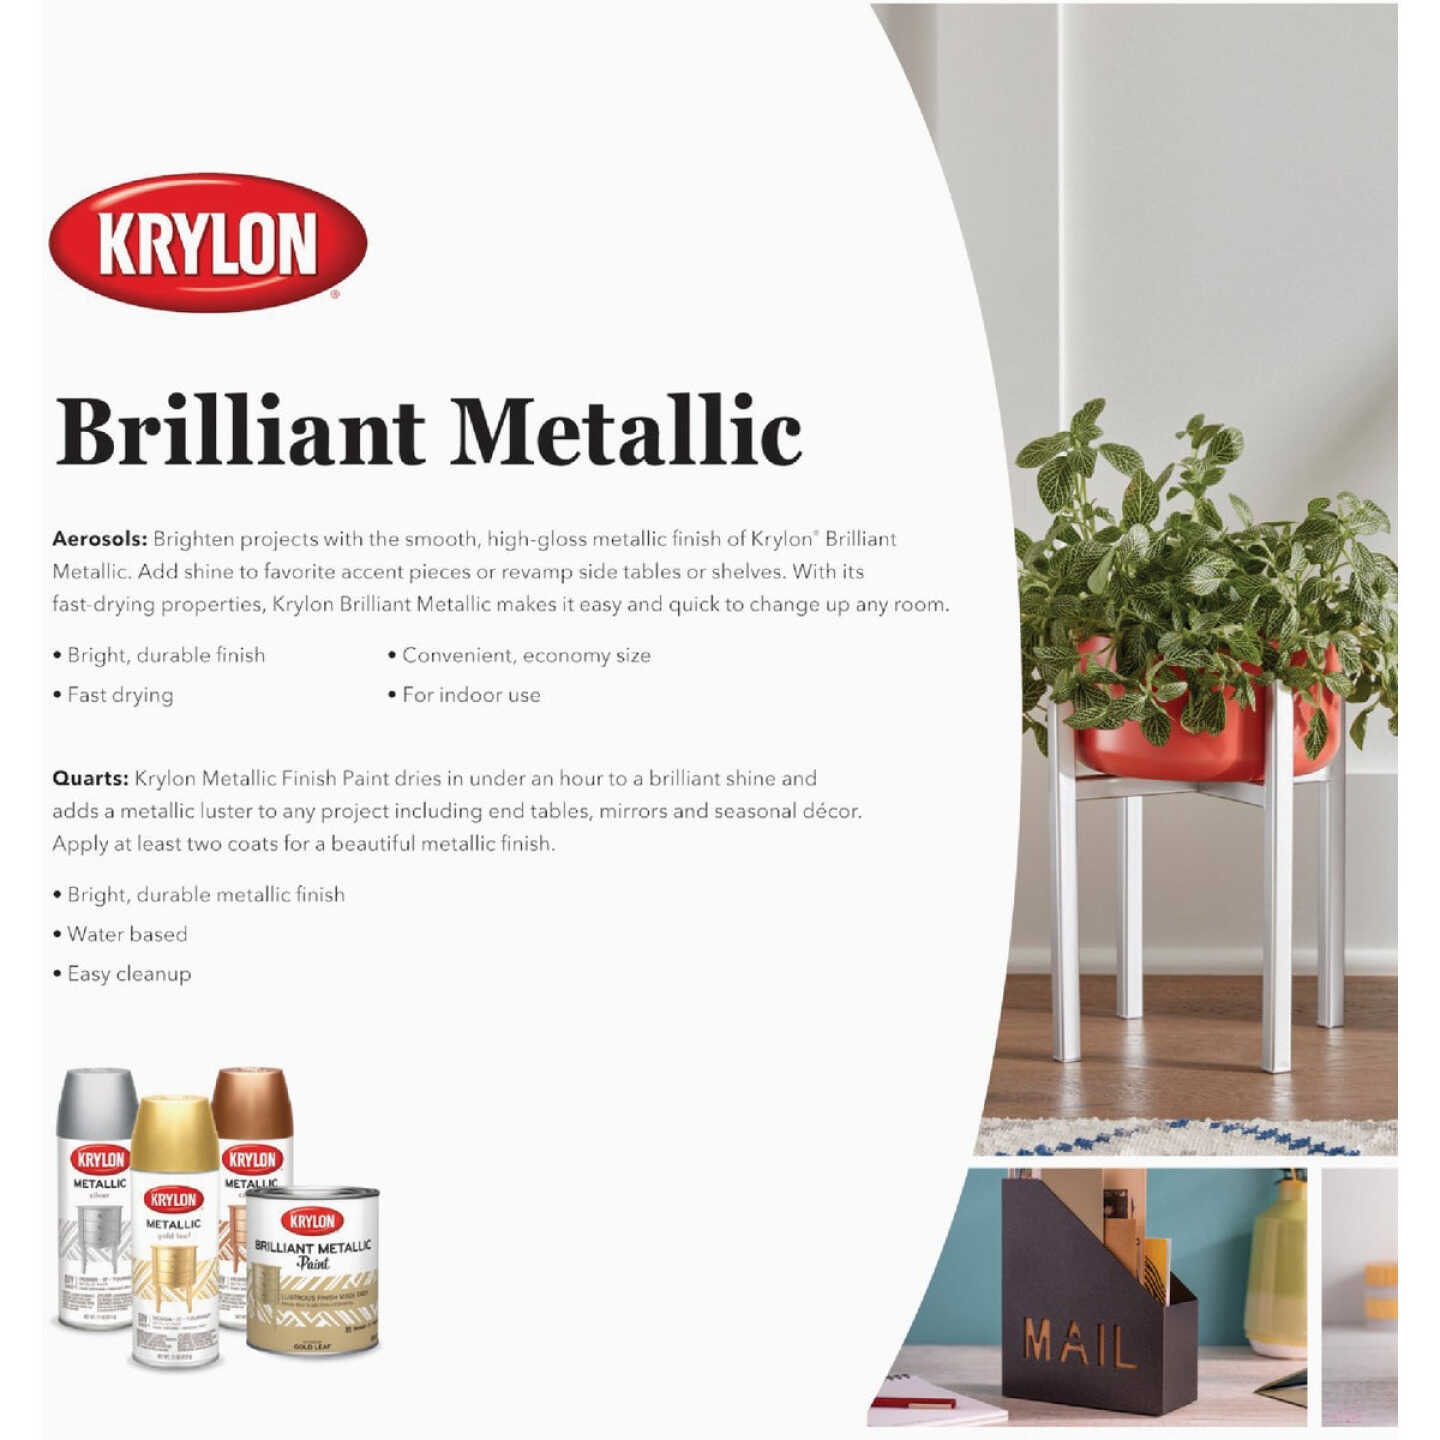 Krylon Foil High Gloss Gold Metallic Spray Paint 8 oz.